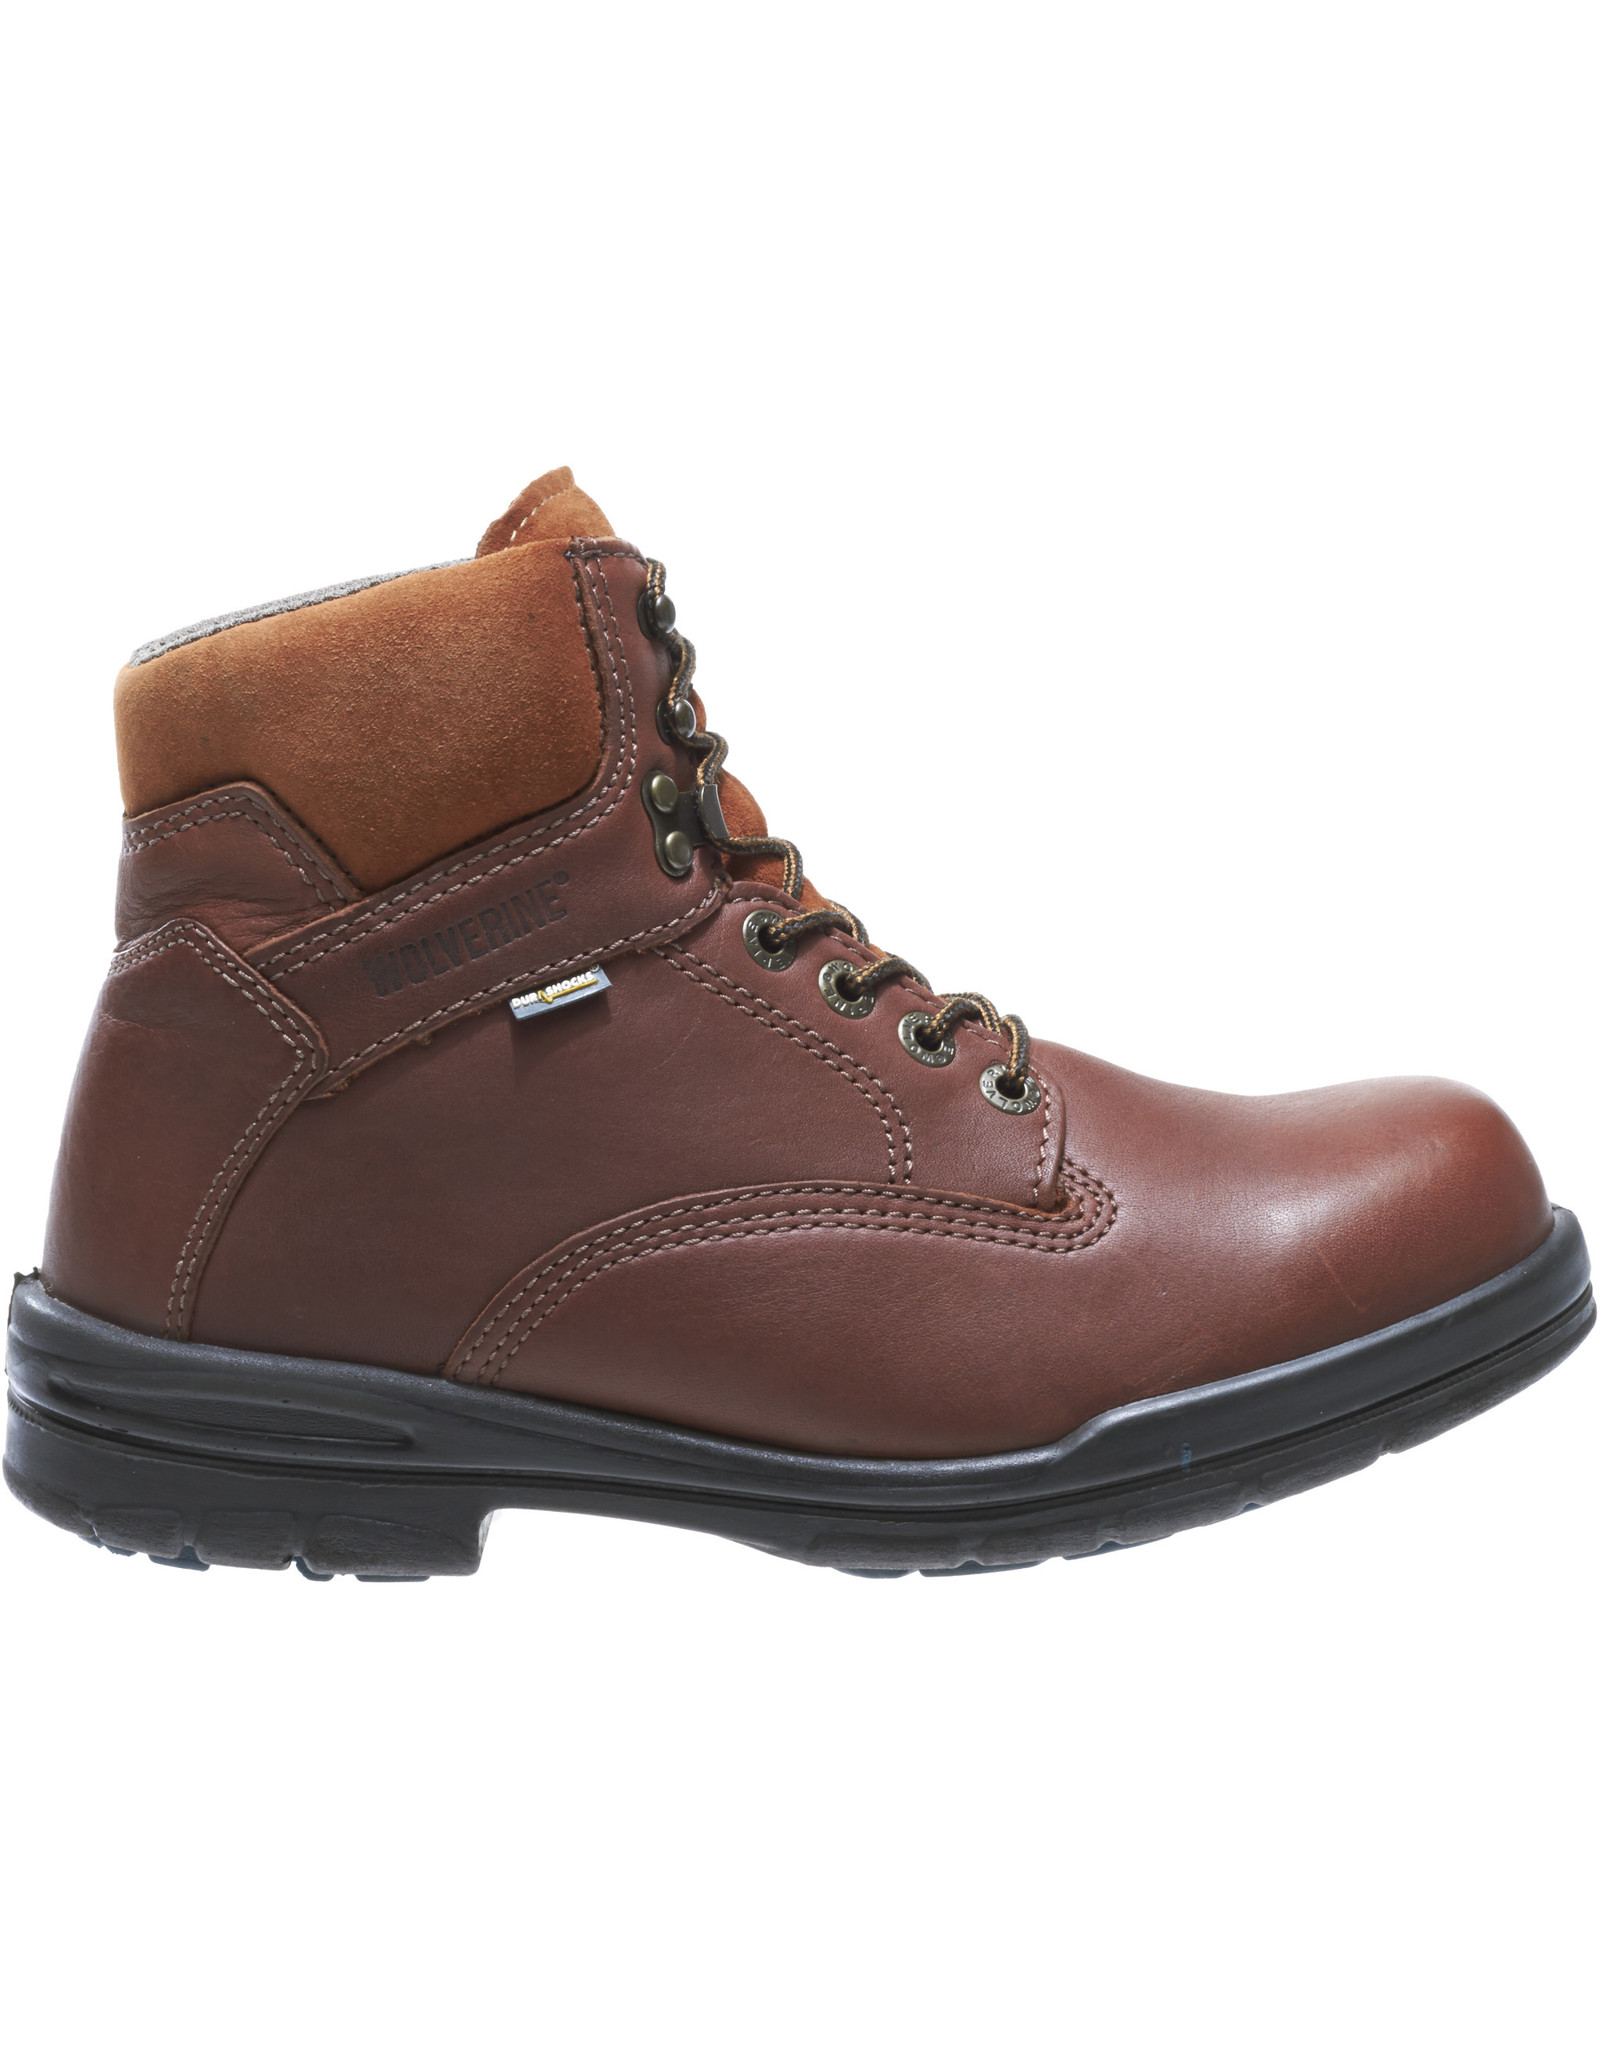 Wolverine Men's Steel Toe Durashock W03120 Brown Work Boots